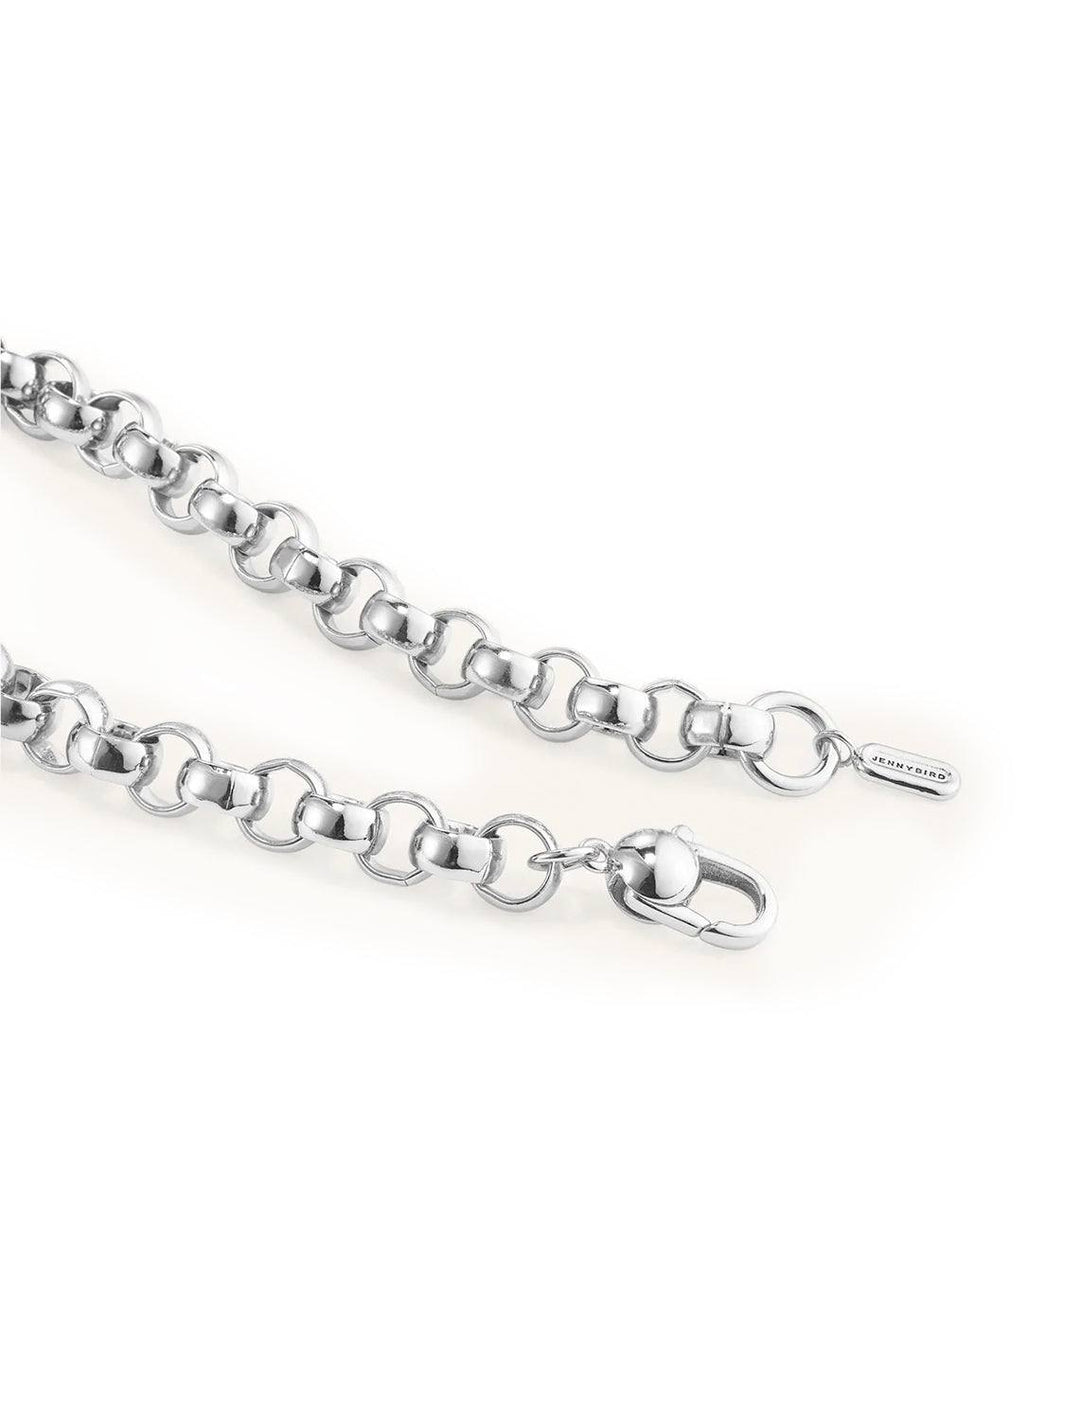 Jenny Bird rodin chain in silver - Twigs